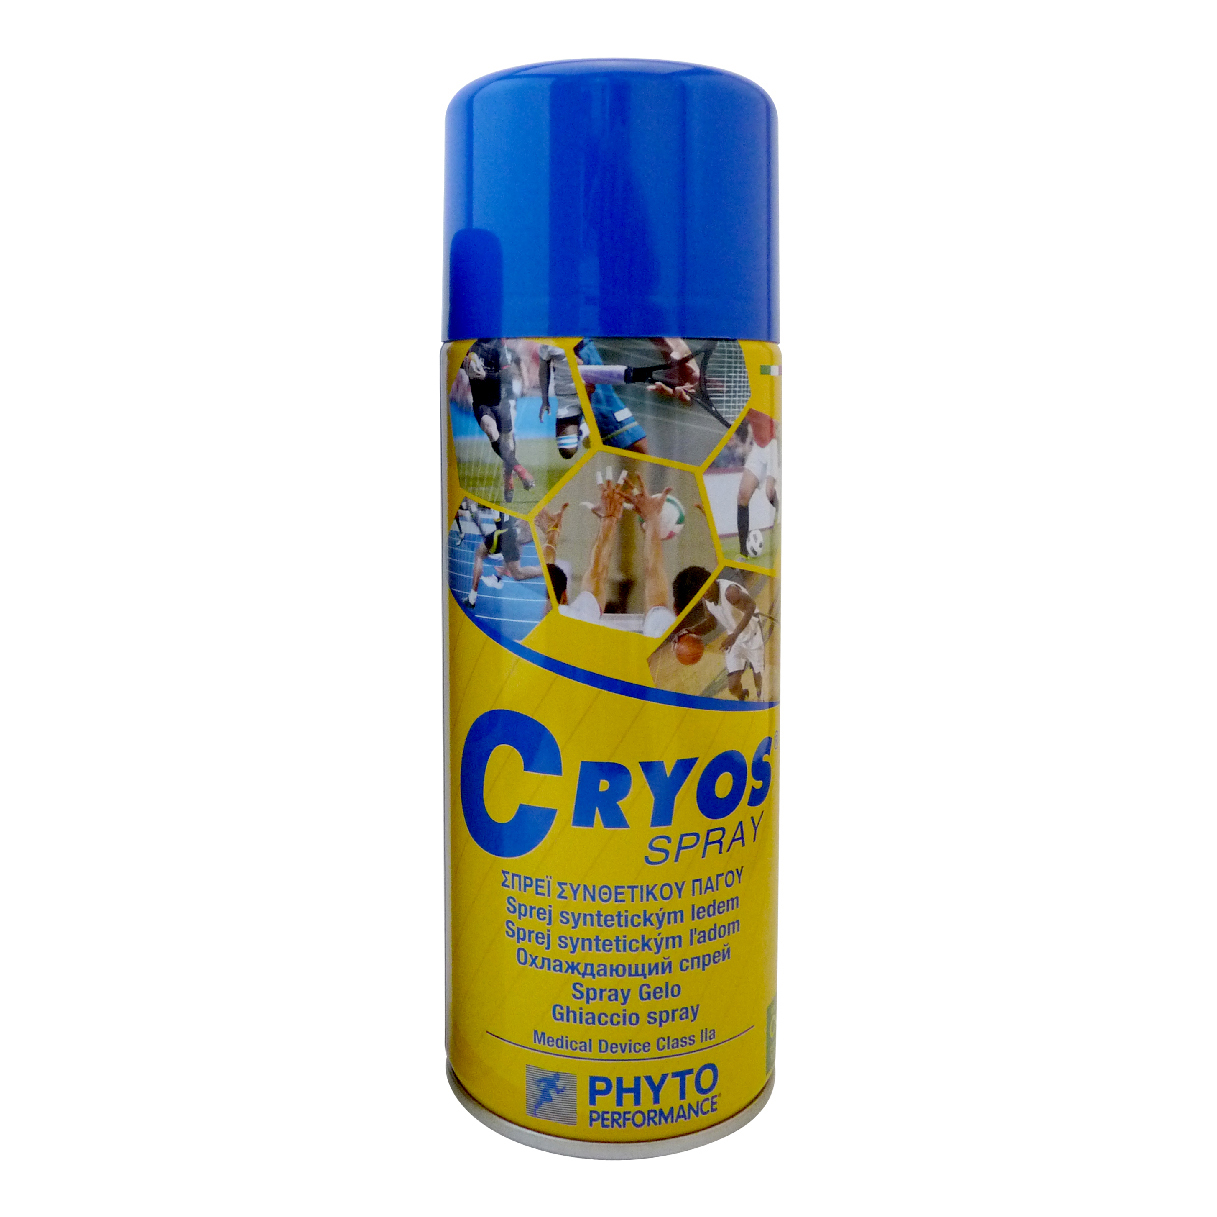 Ceroxmed Ghiaccio Spray 200 ml